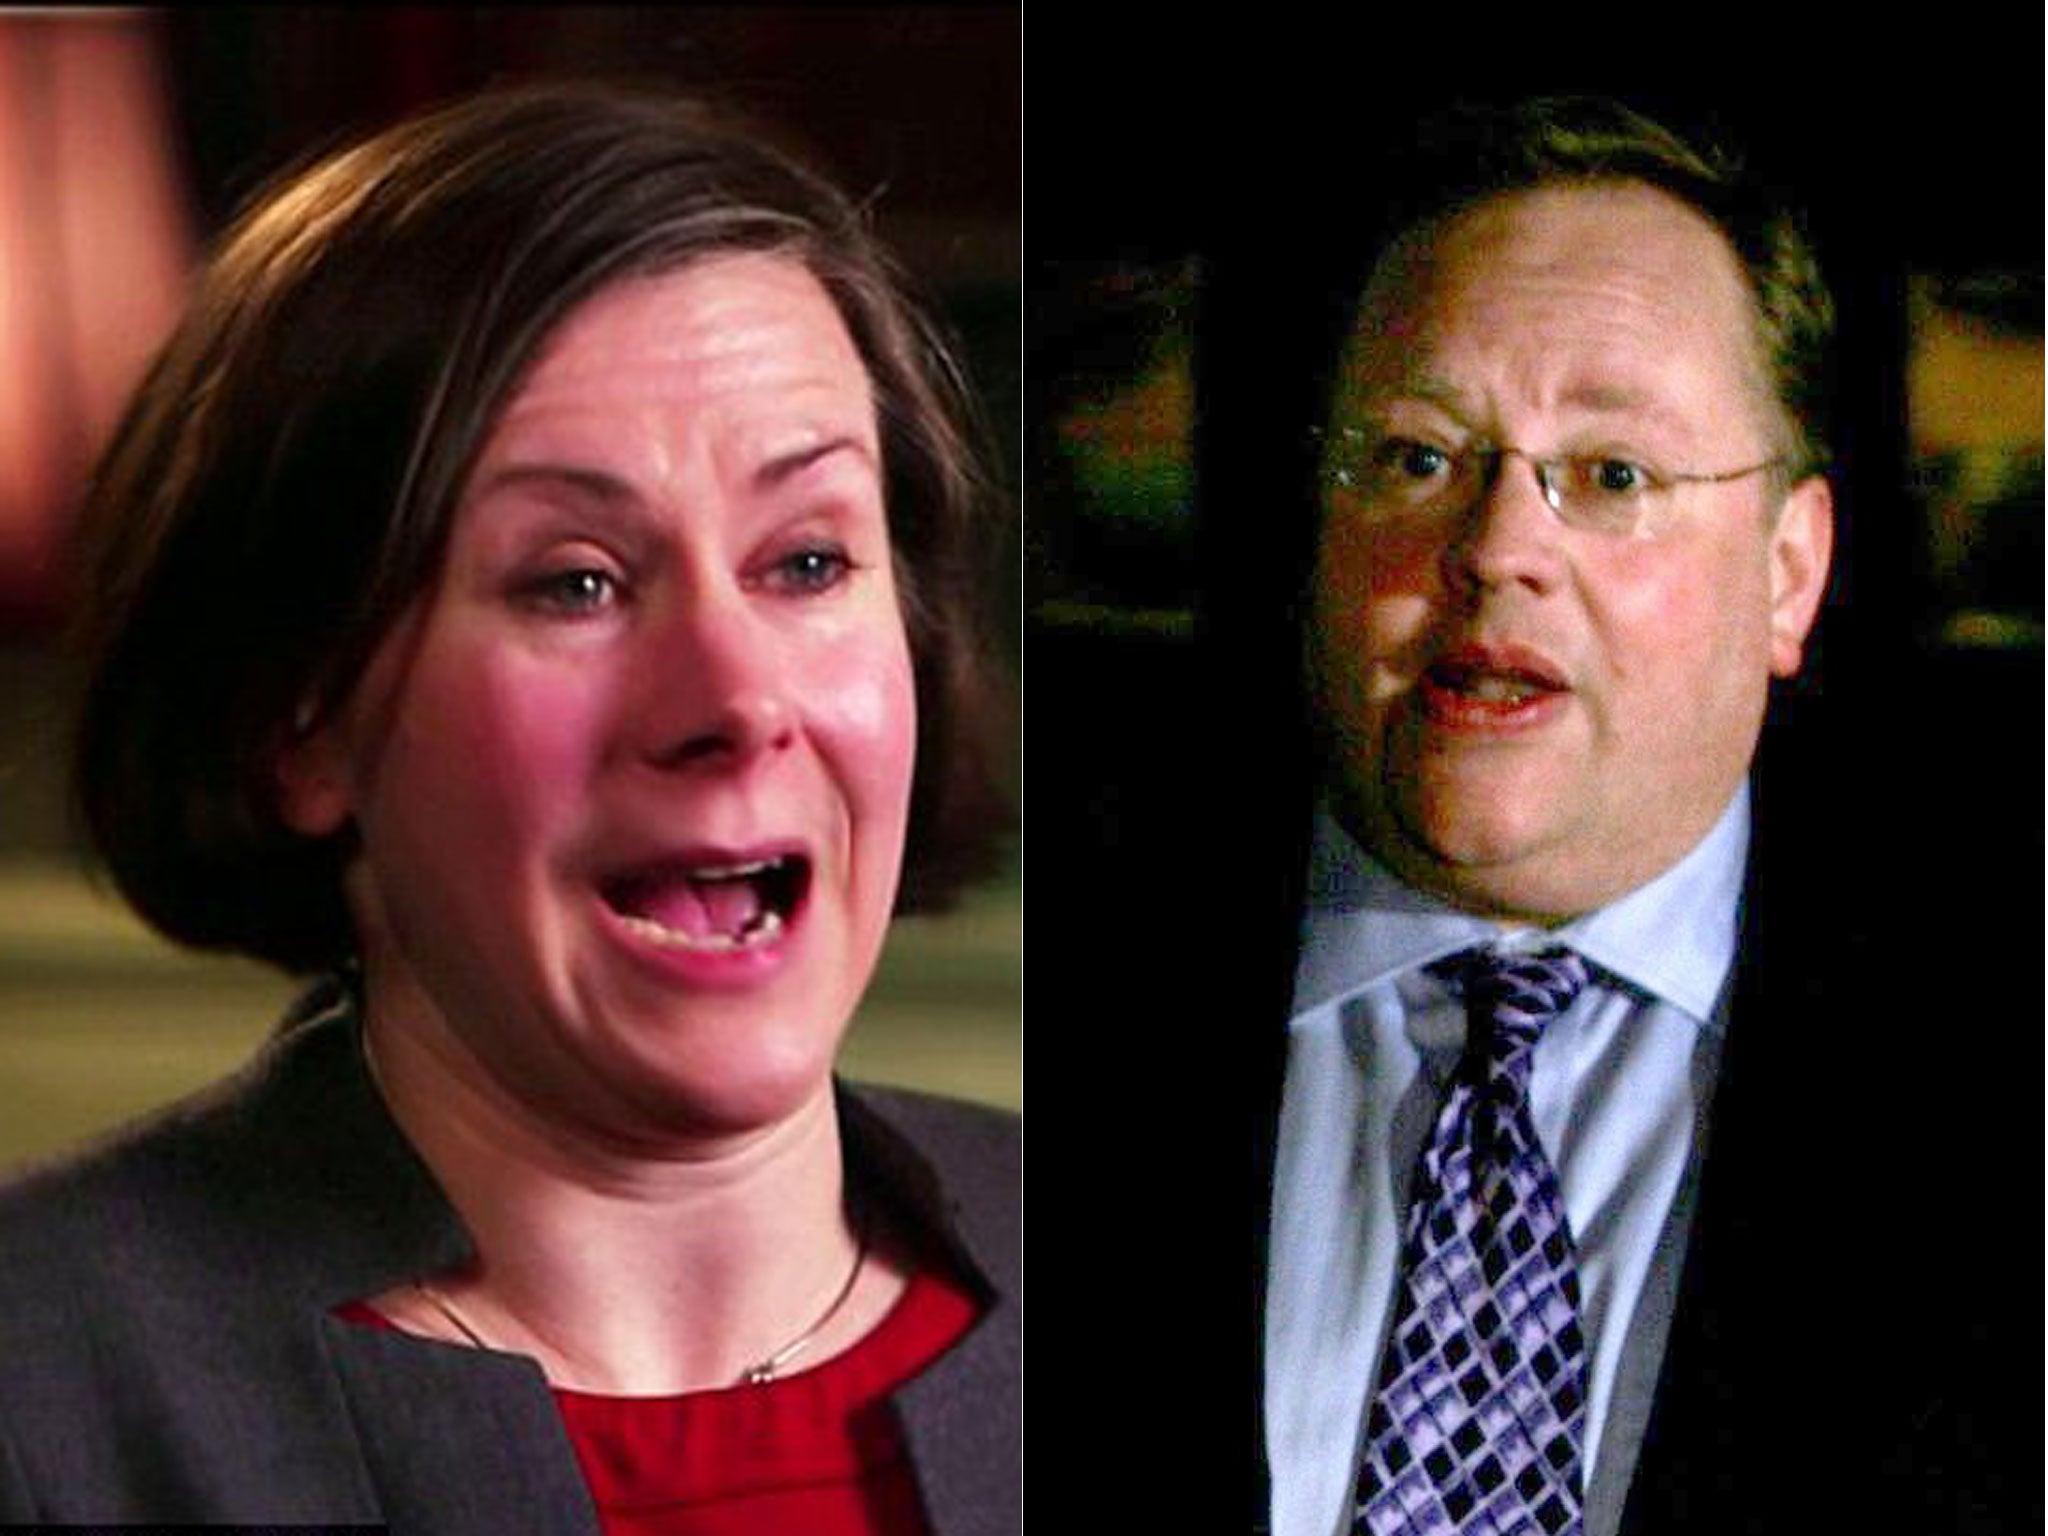 Bridget Harris, left, a former Clegg aide, has quit over the Lord Rennard affair